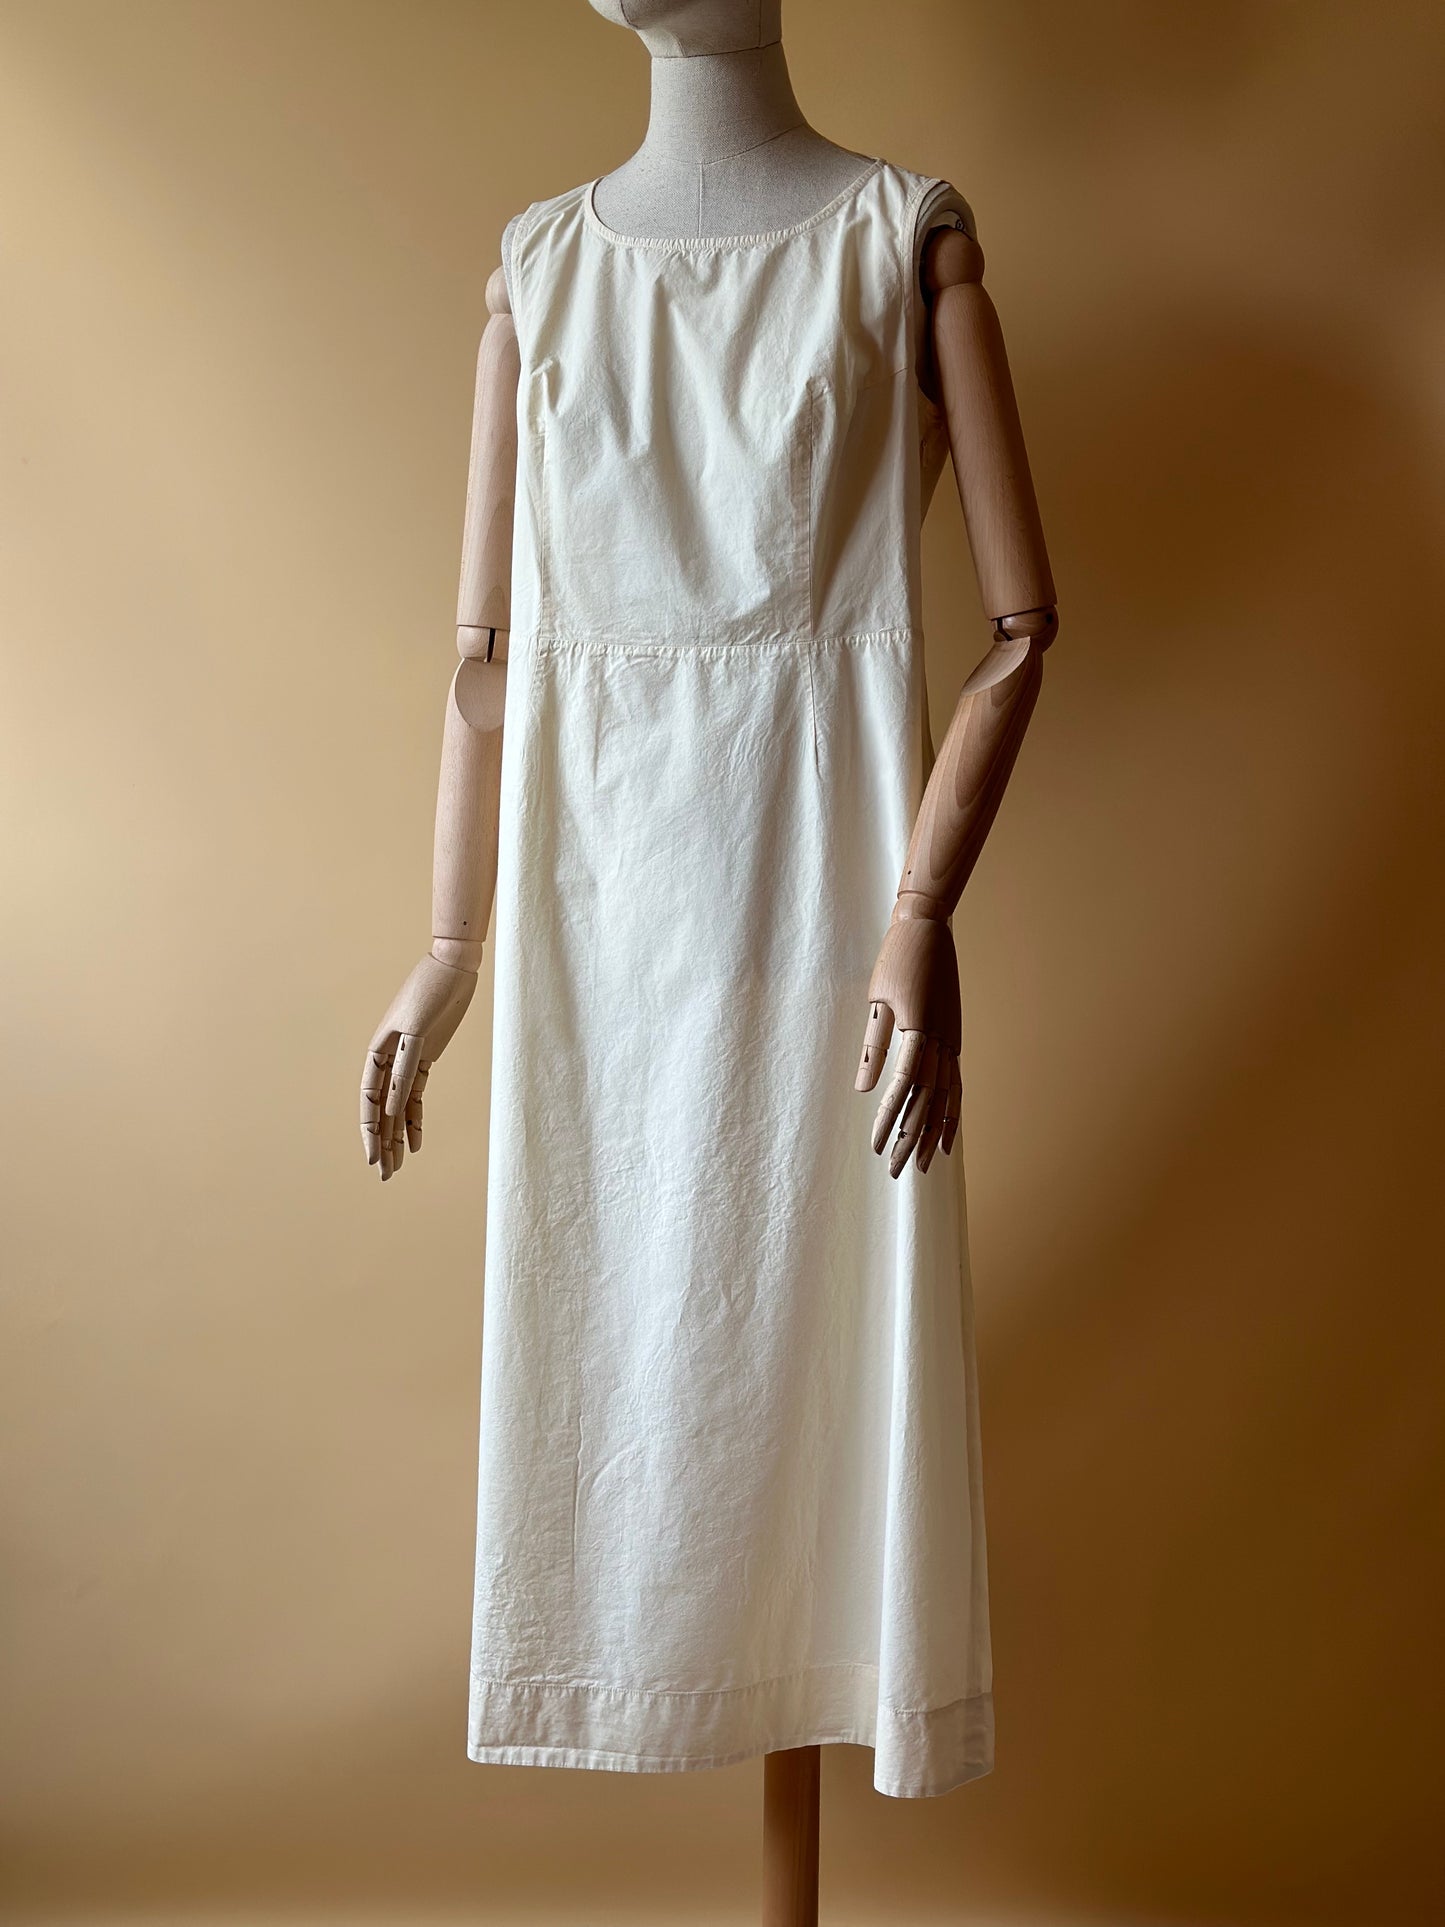 Long Cream Cotton Dress